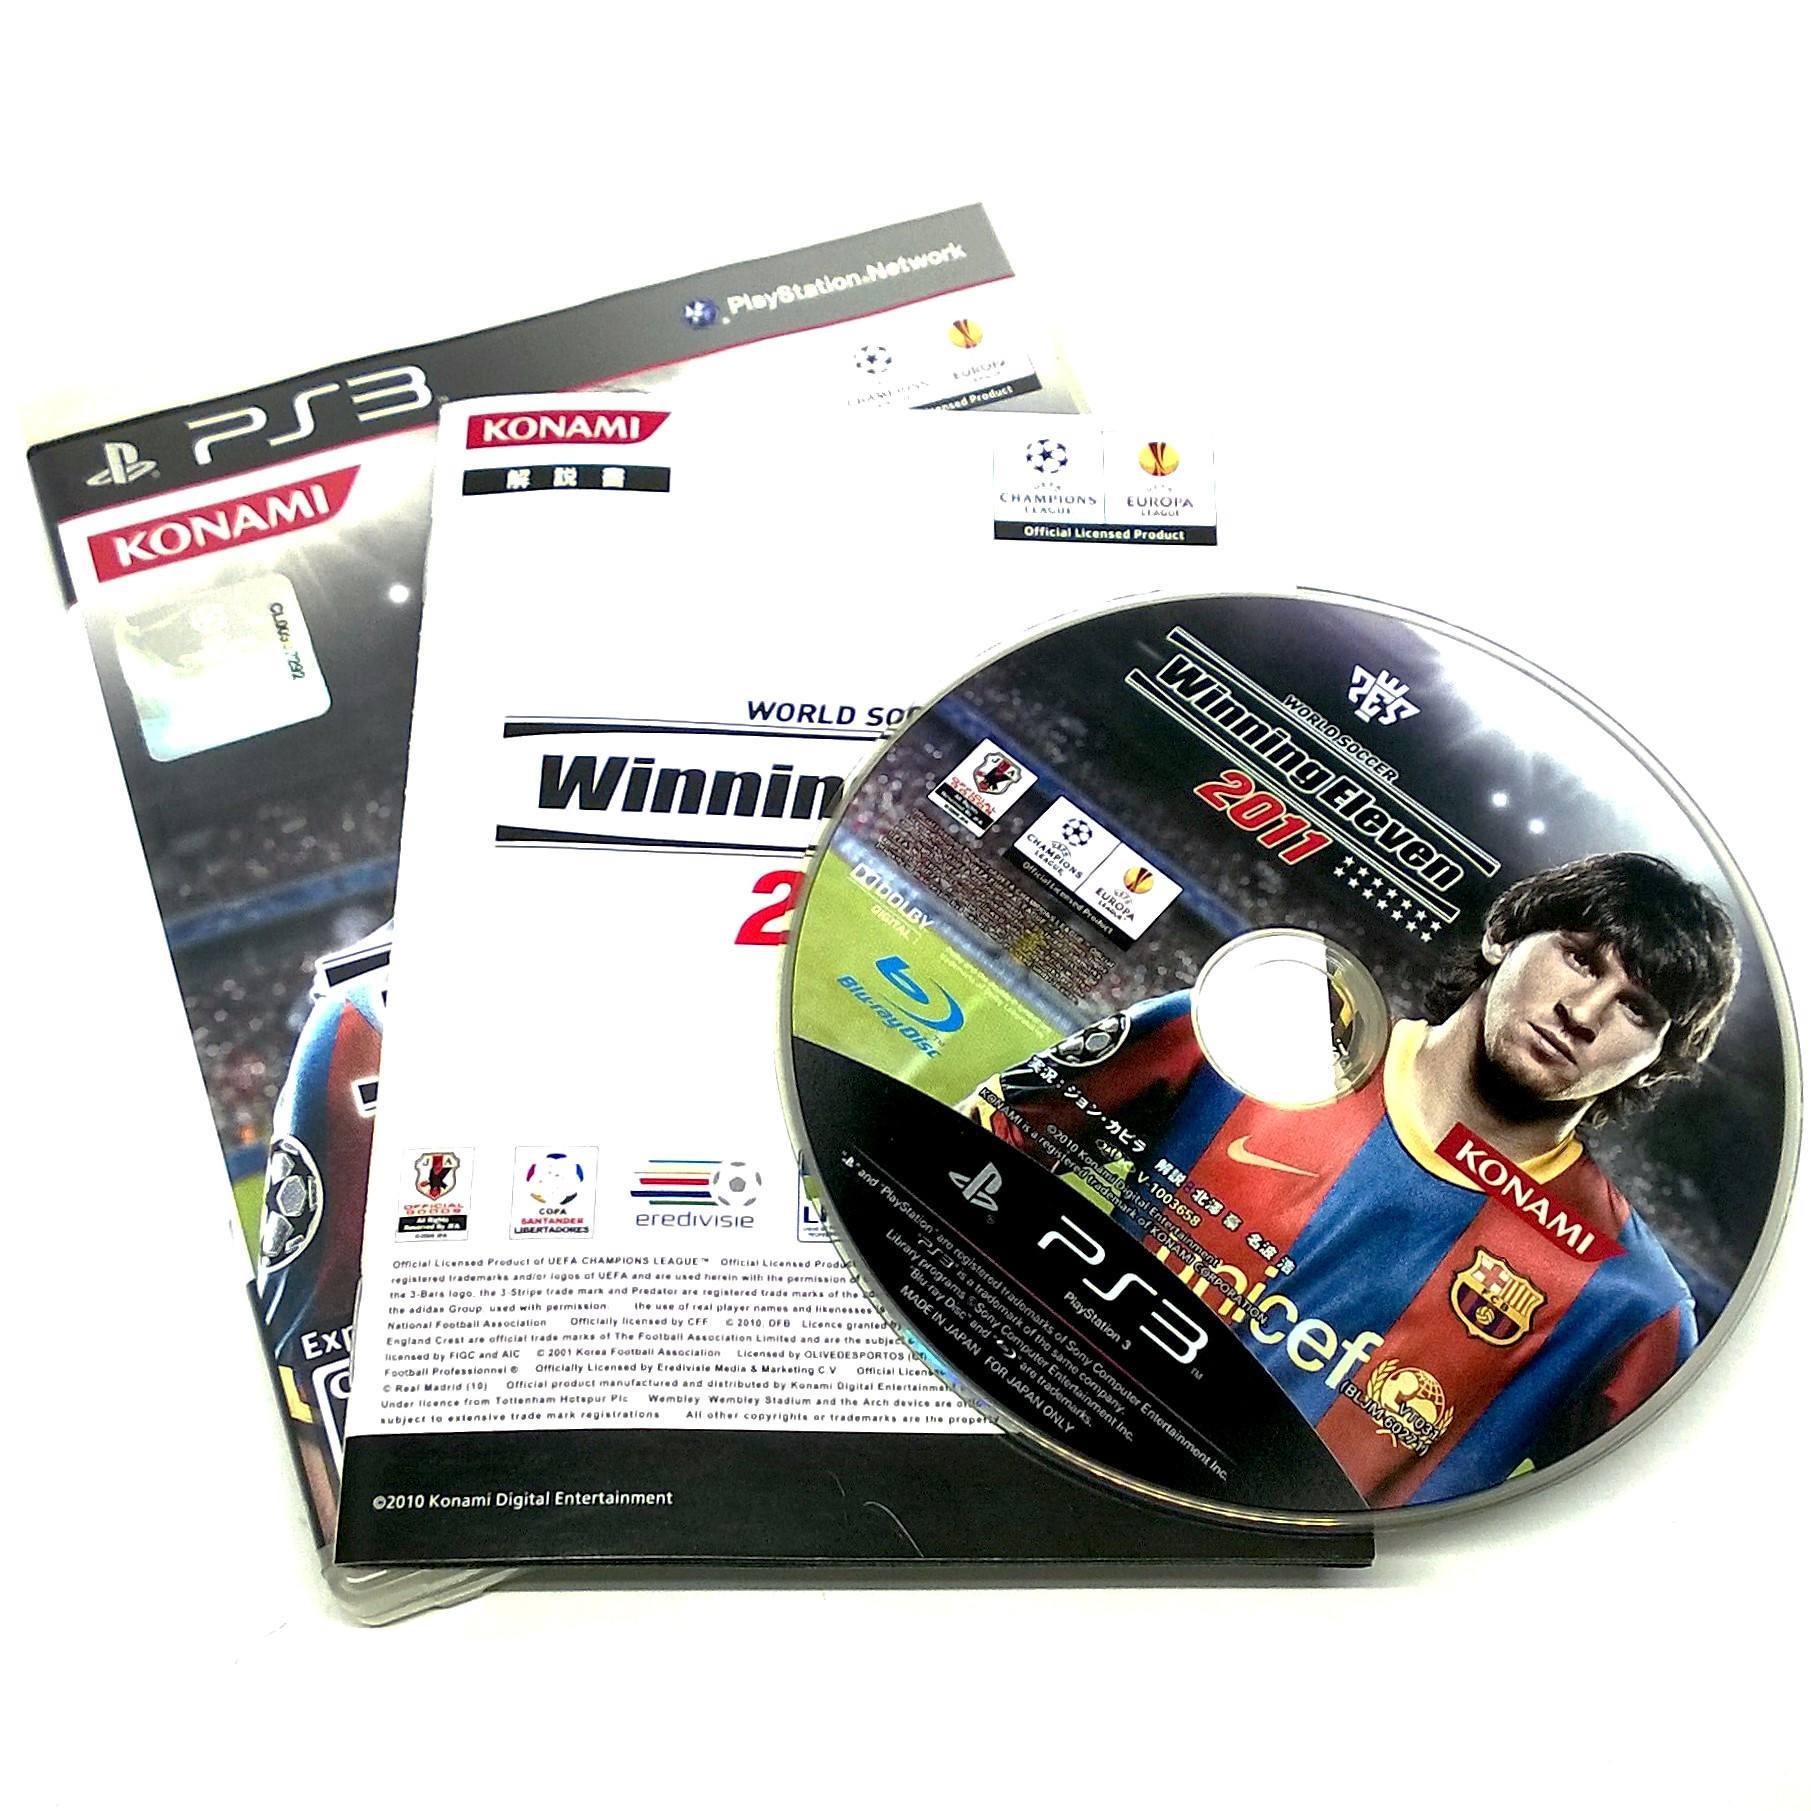 World Soccer Winning Eleven 2011